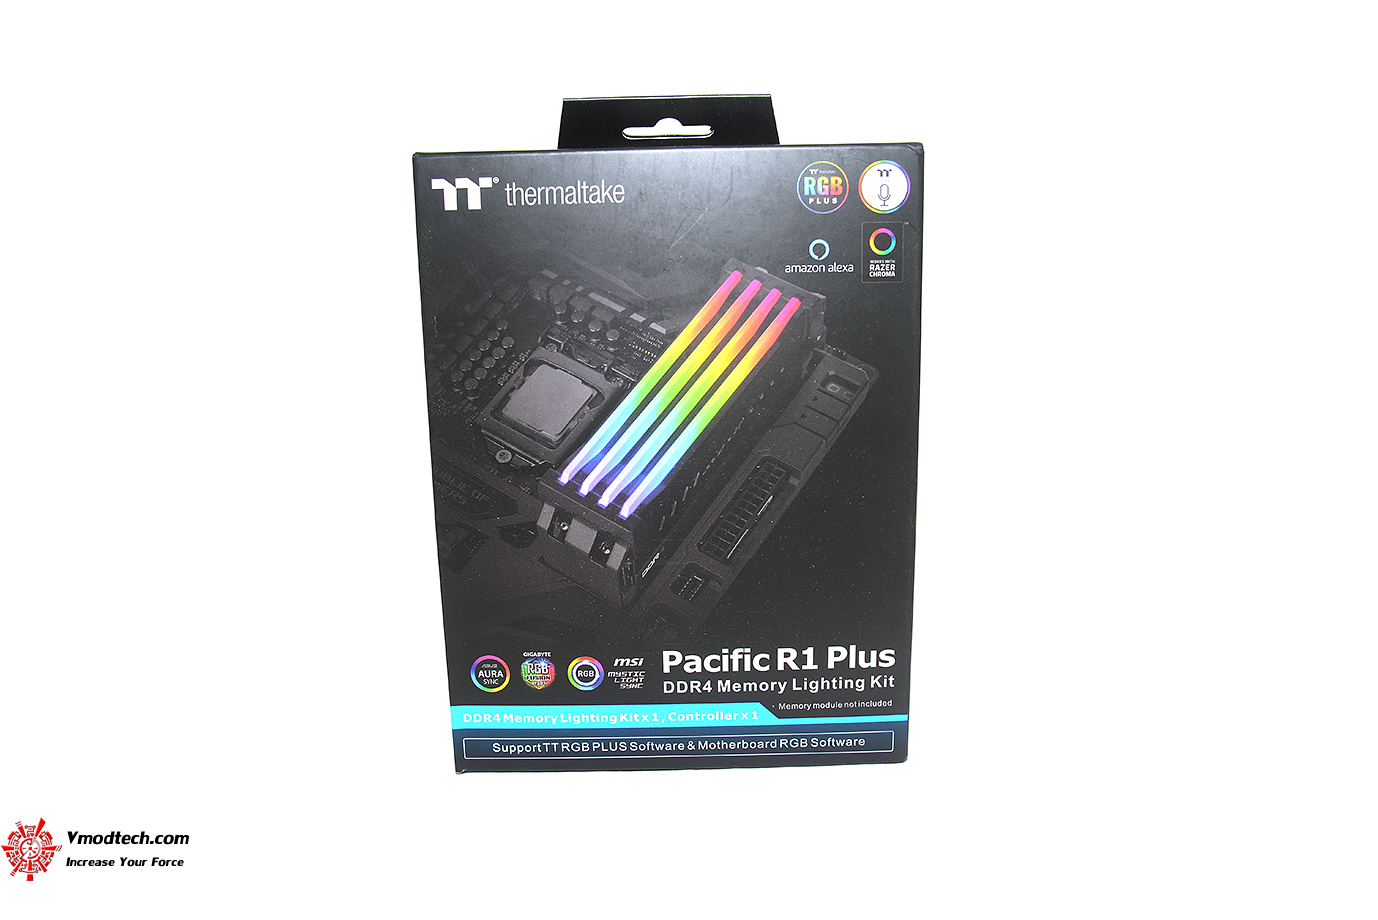 dsc 5446 Thermaltake Pacific R1 Plus DDR4 Memory Lighting Kit Review